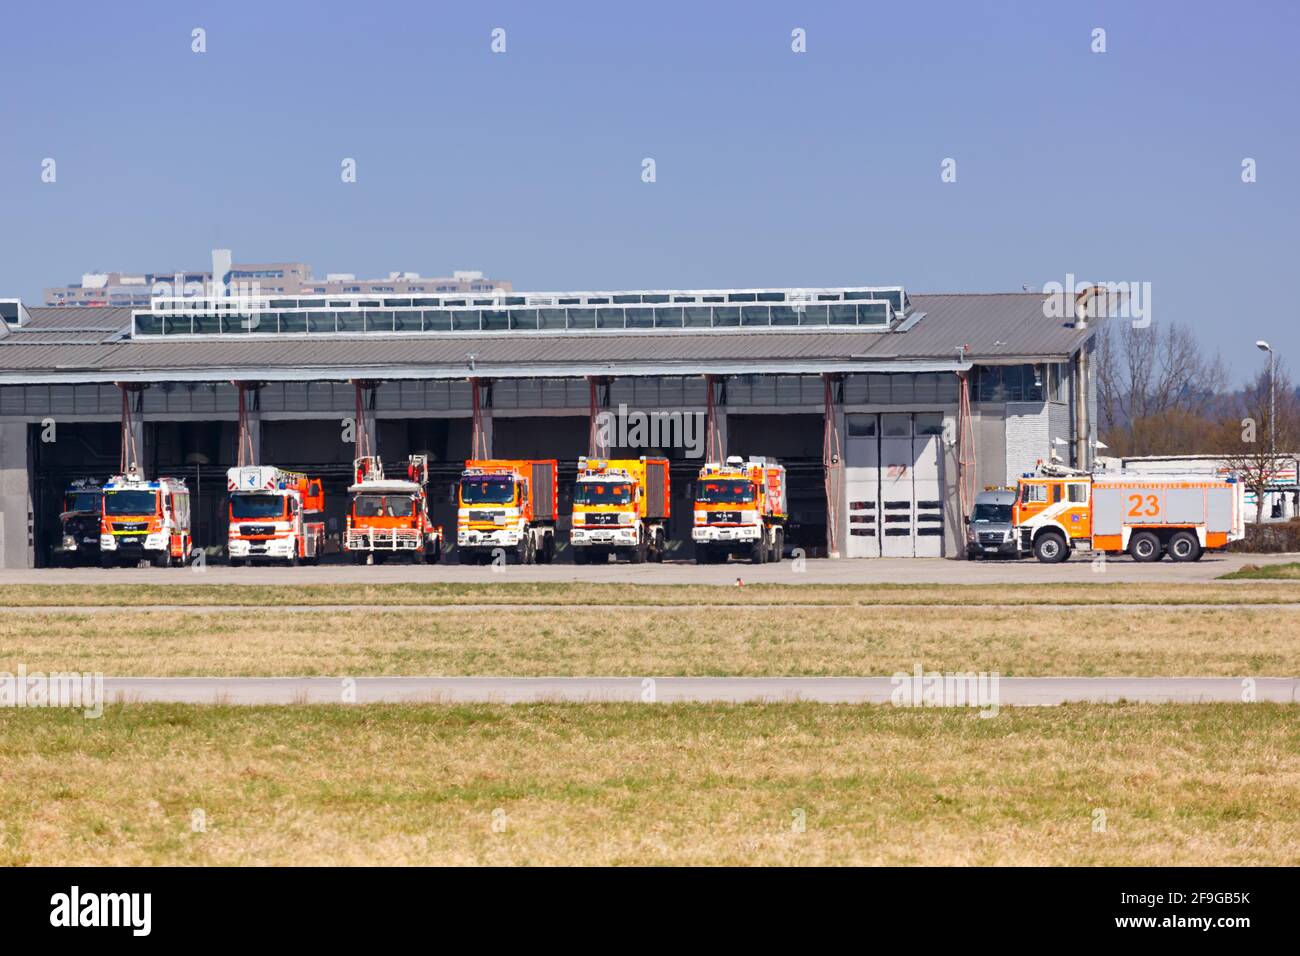 Stuttgart, Germany - April 6, 2018: Fire station at Stuttgart airport (STR) in Germany. Stock Photo